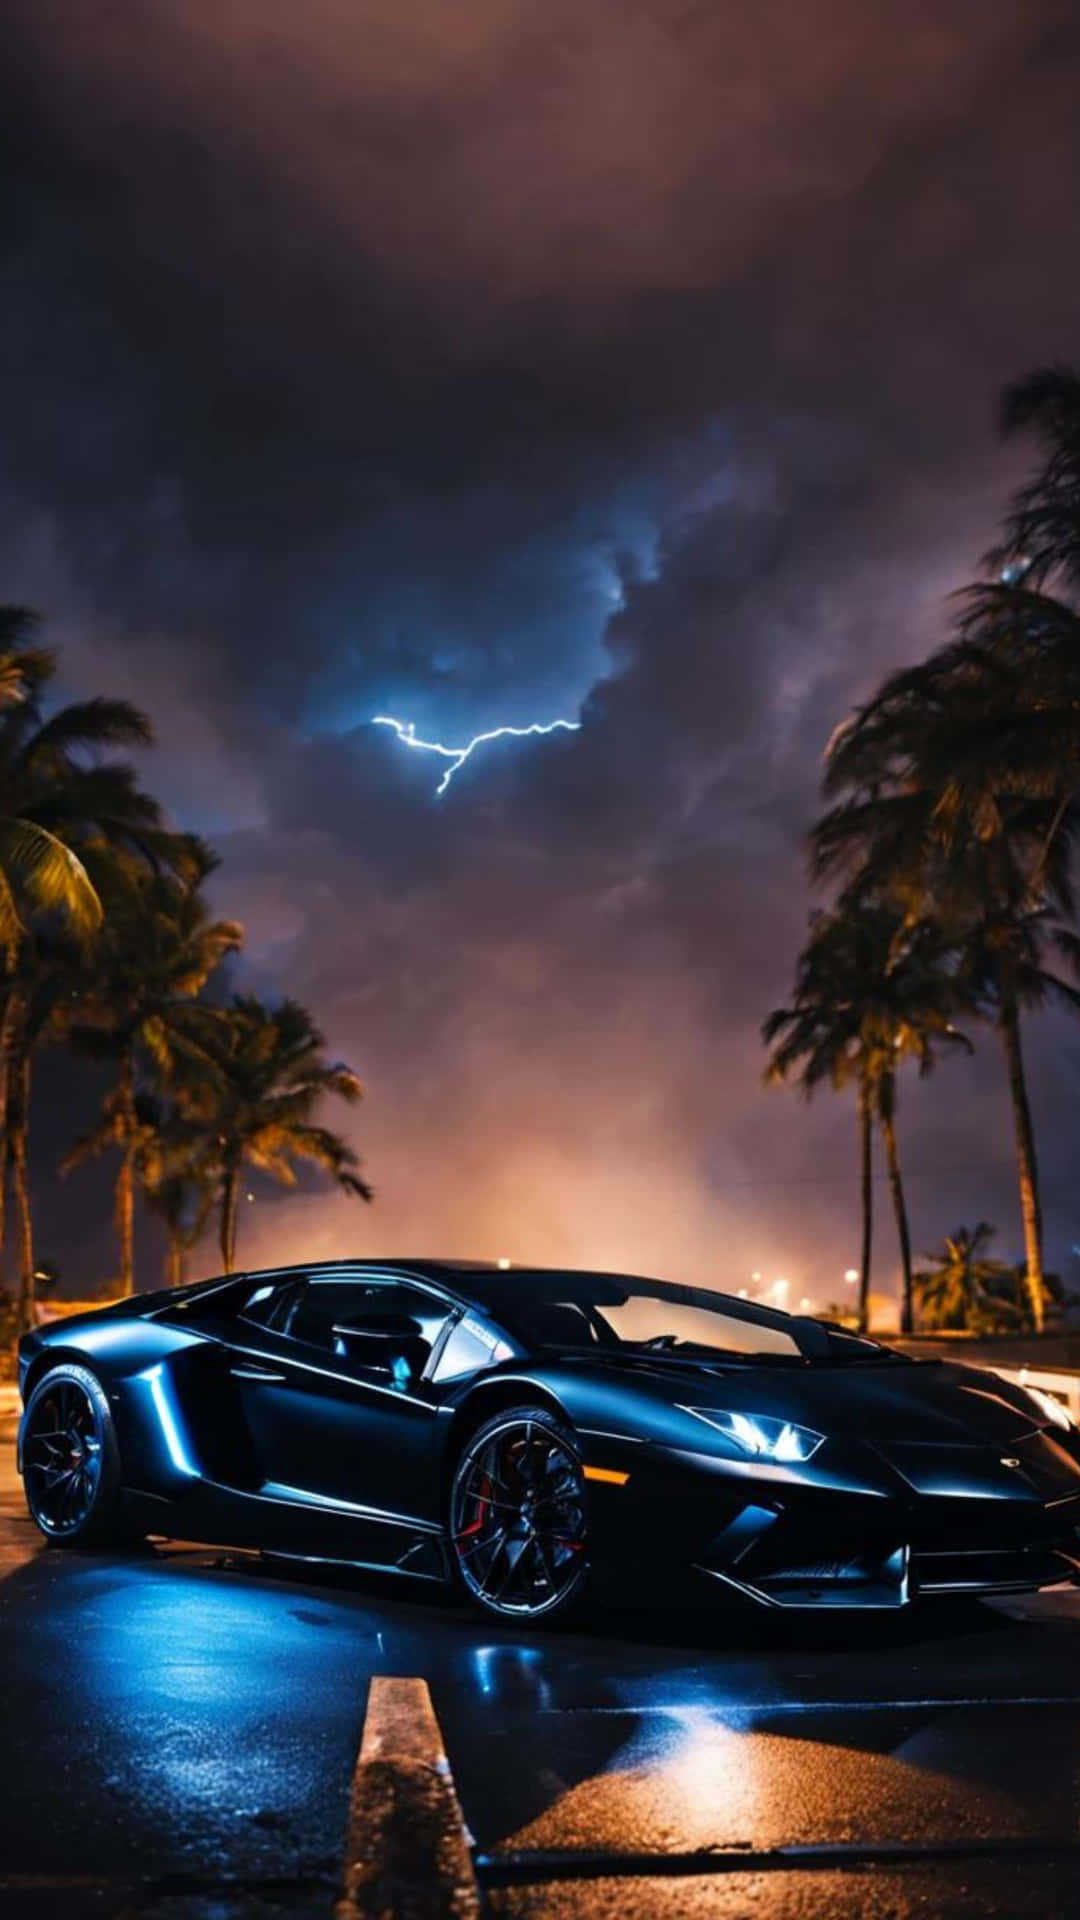 Neon Lit Lamborghini Under Stormy Skies.jpg Wallpaper